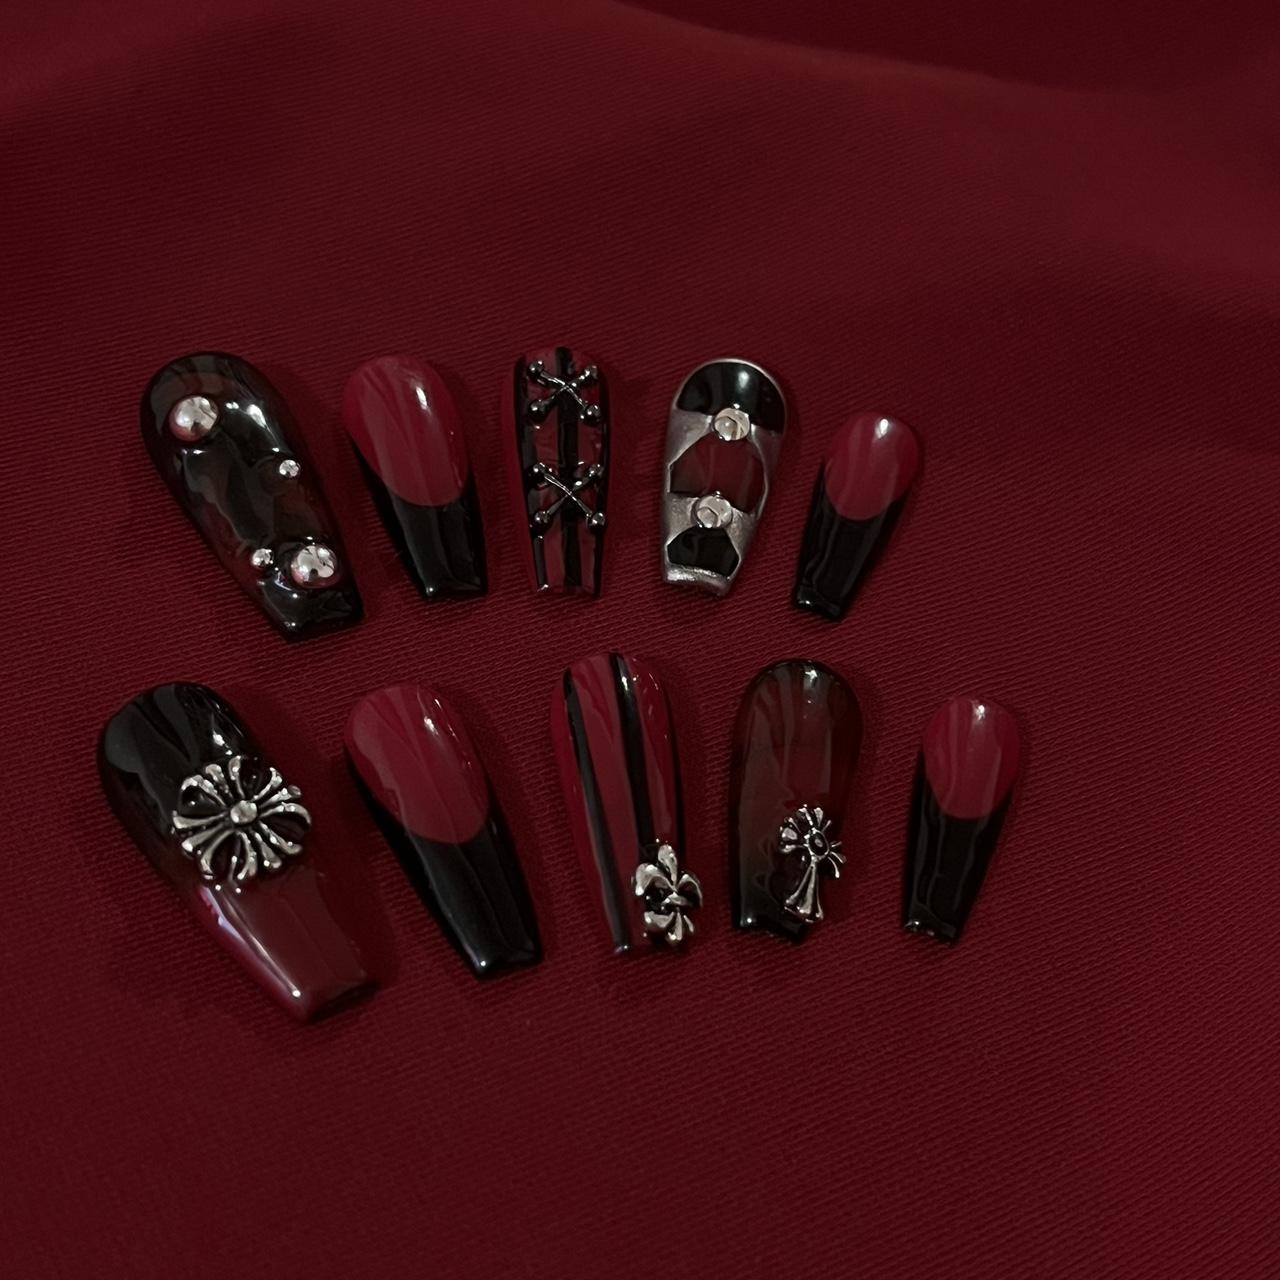 Huda beauty lady luxe nails, never used!nieuwprijs - Depop